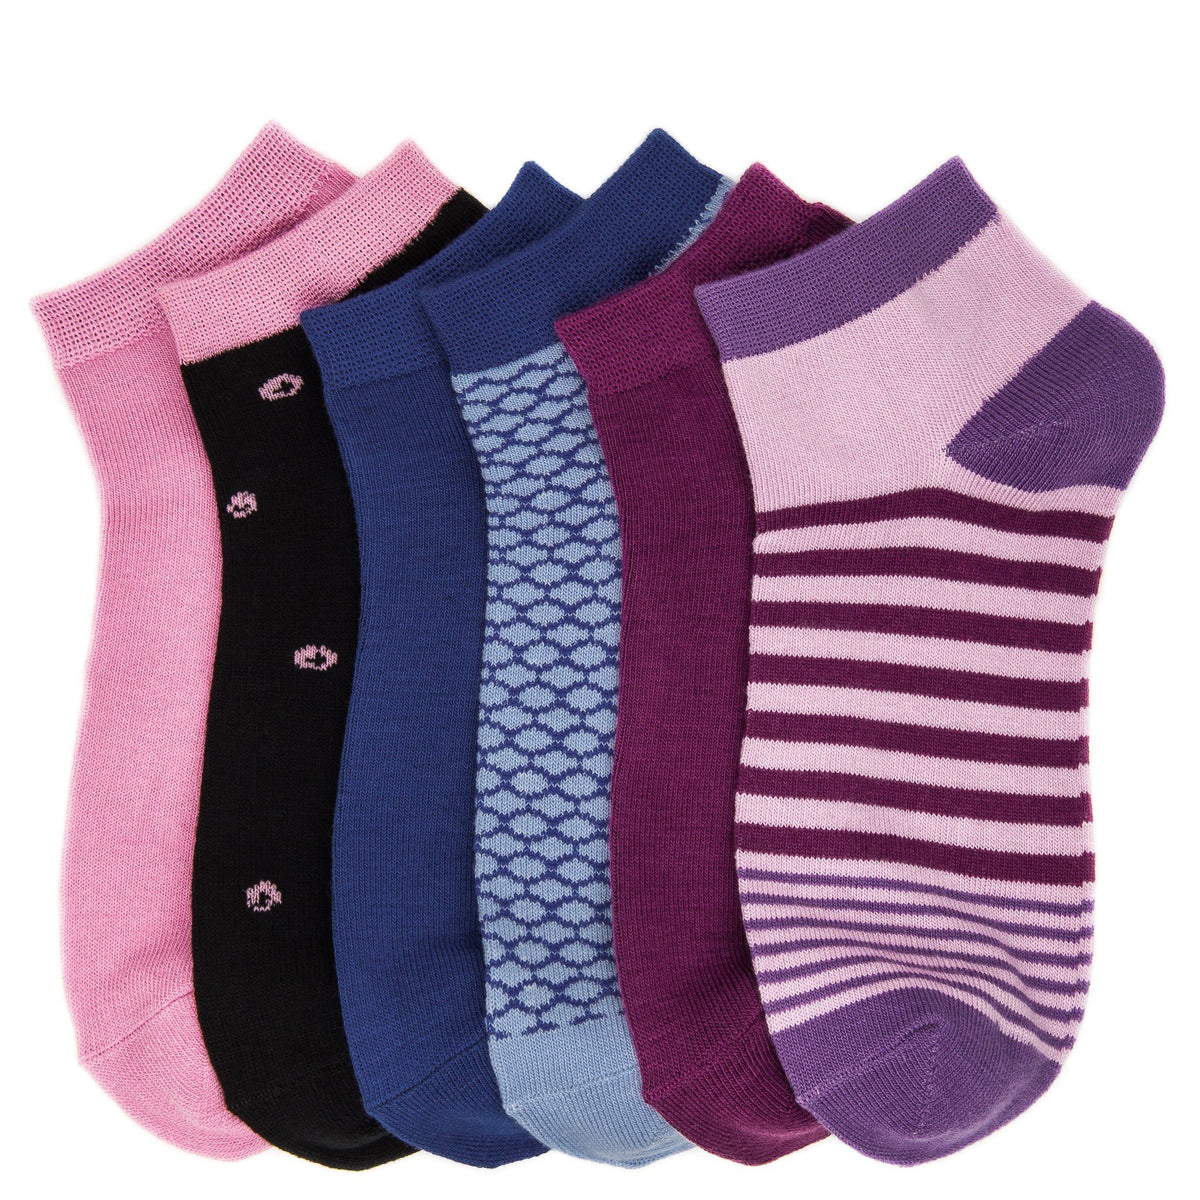 Women's Soft Premium Low Cut Socks - 6 Pairs - Set 1